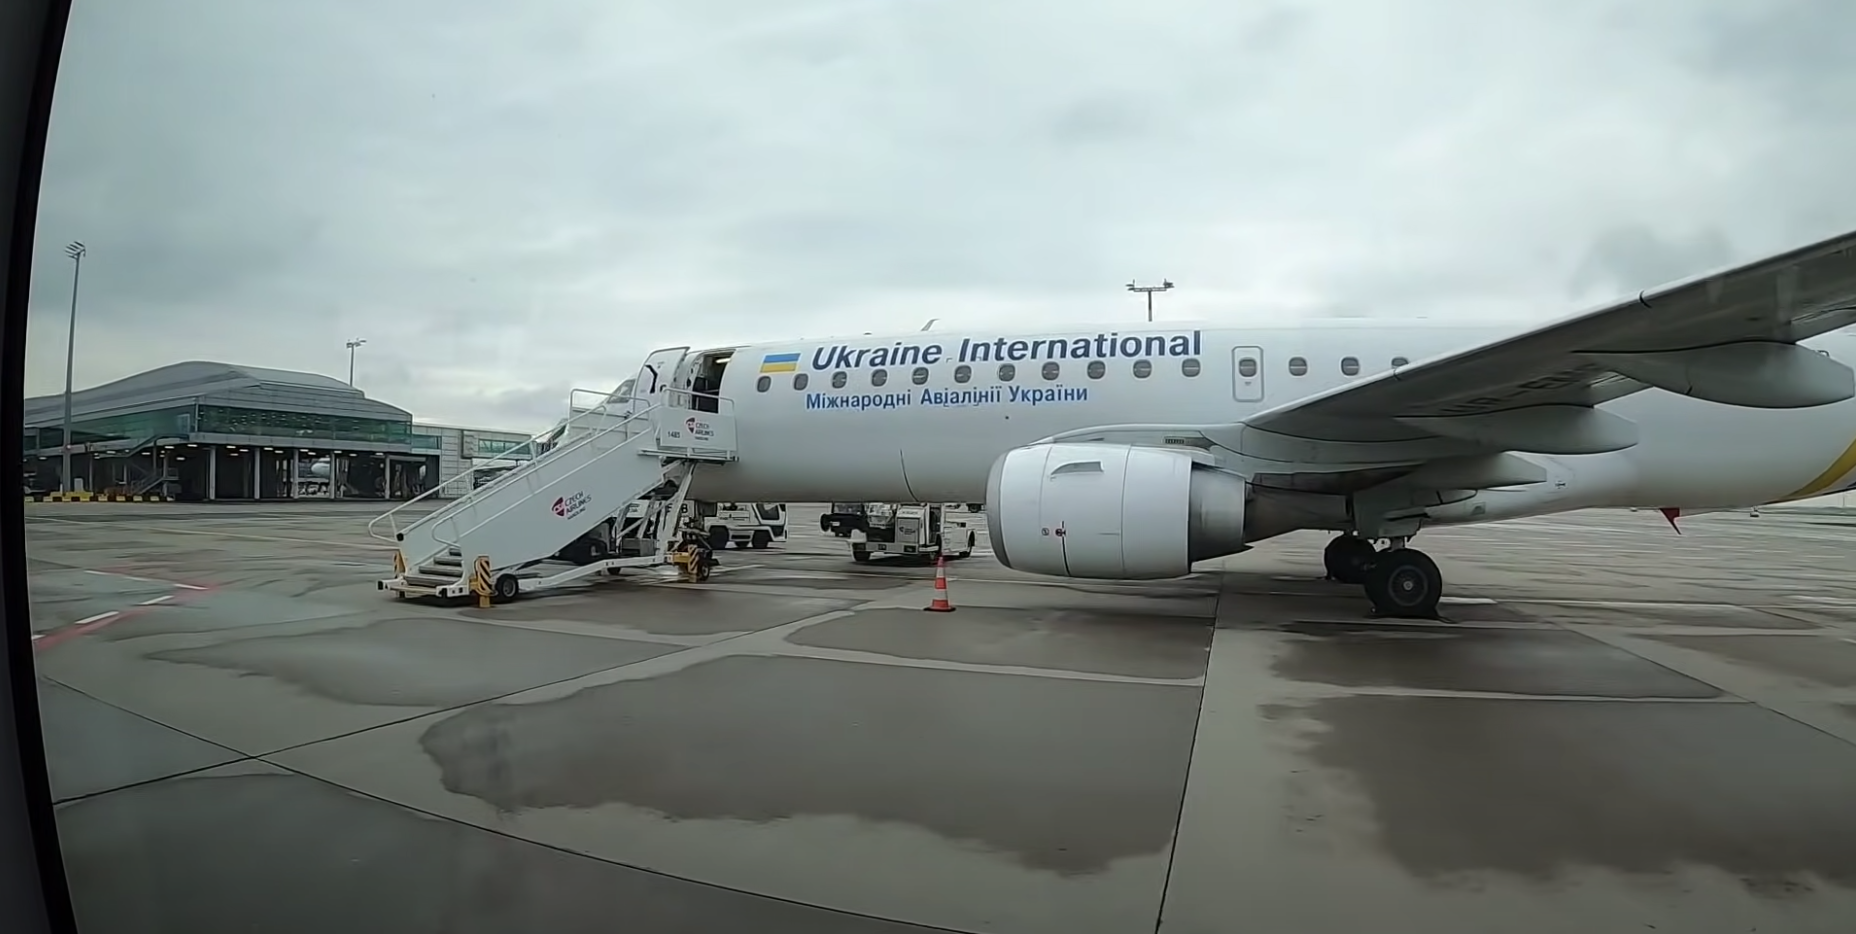 Review: Ukraine International Airlines